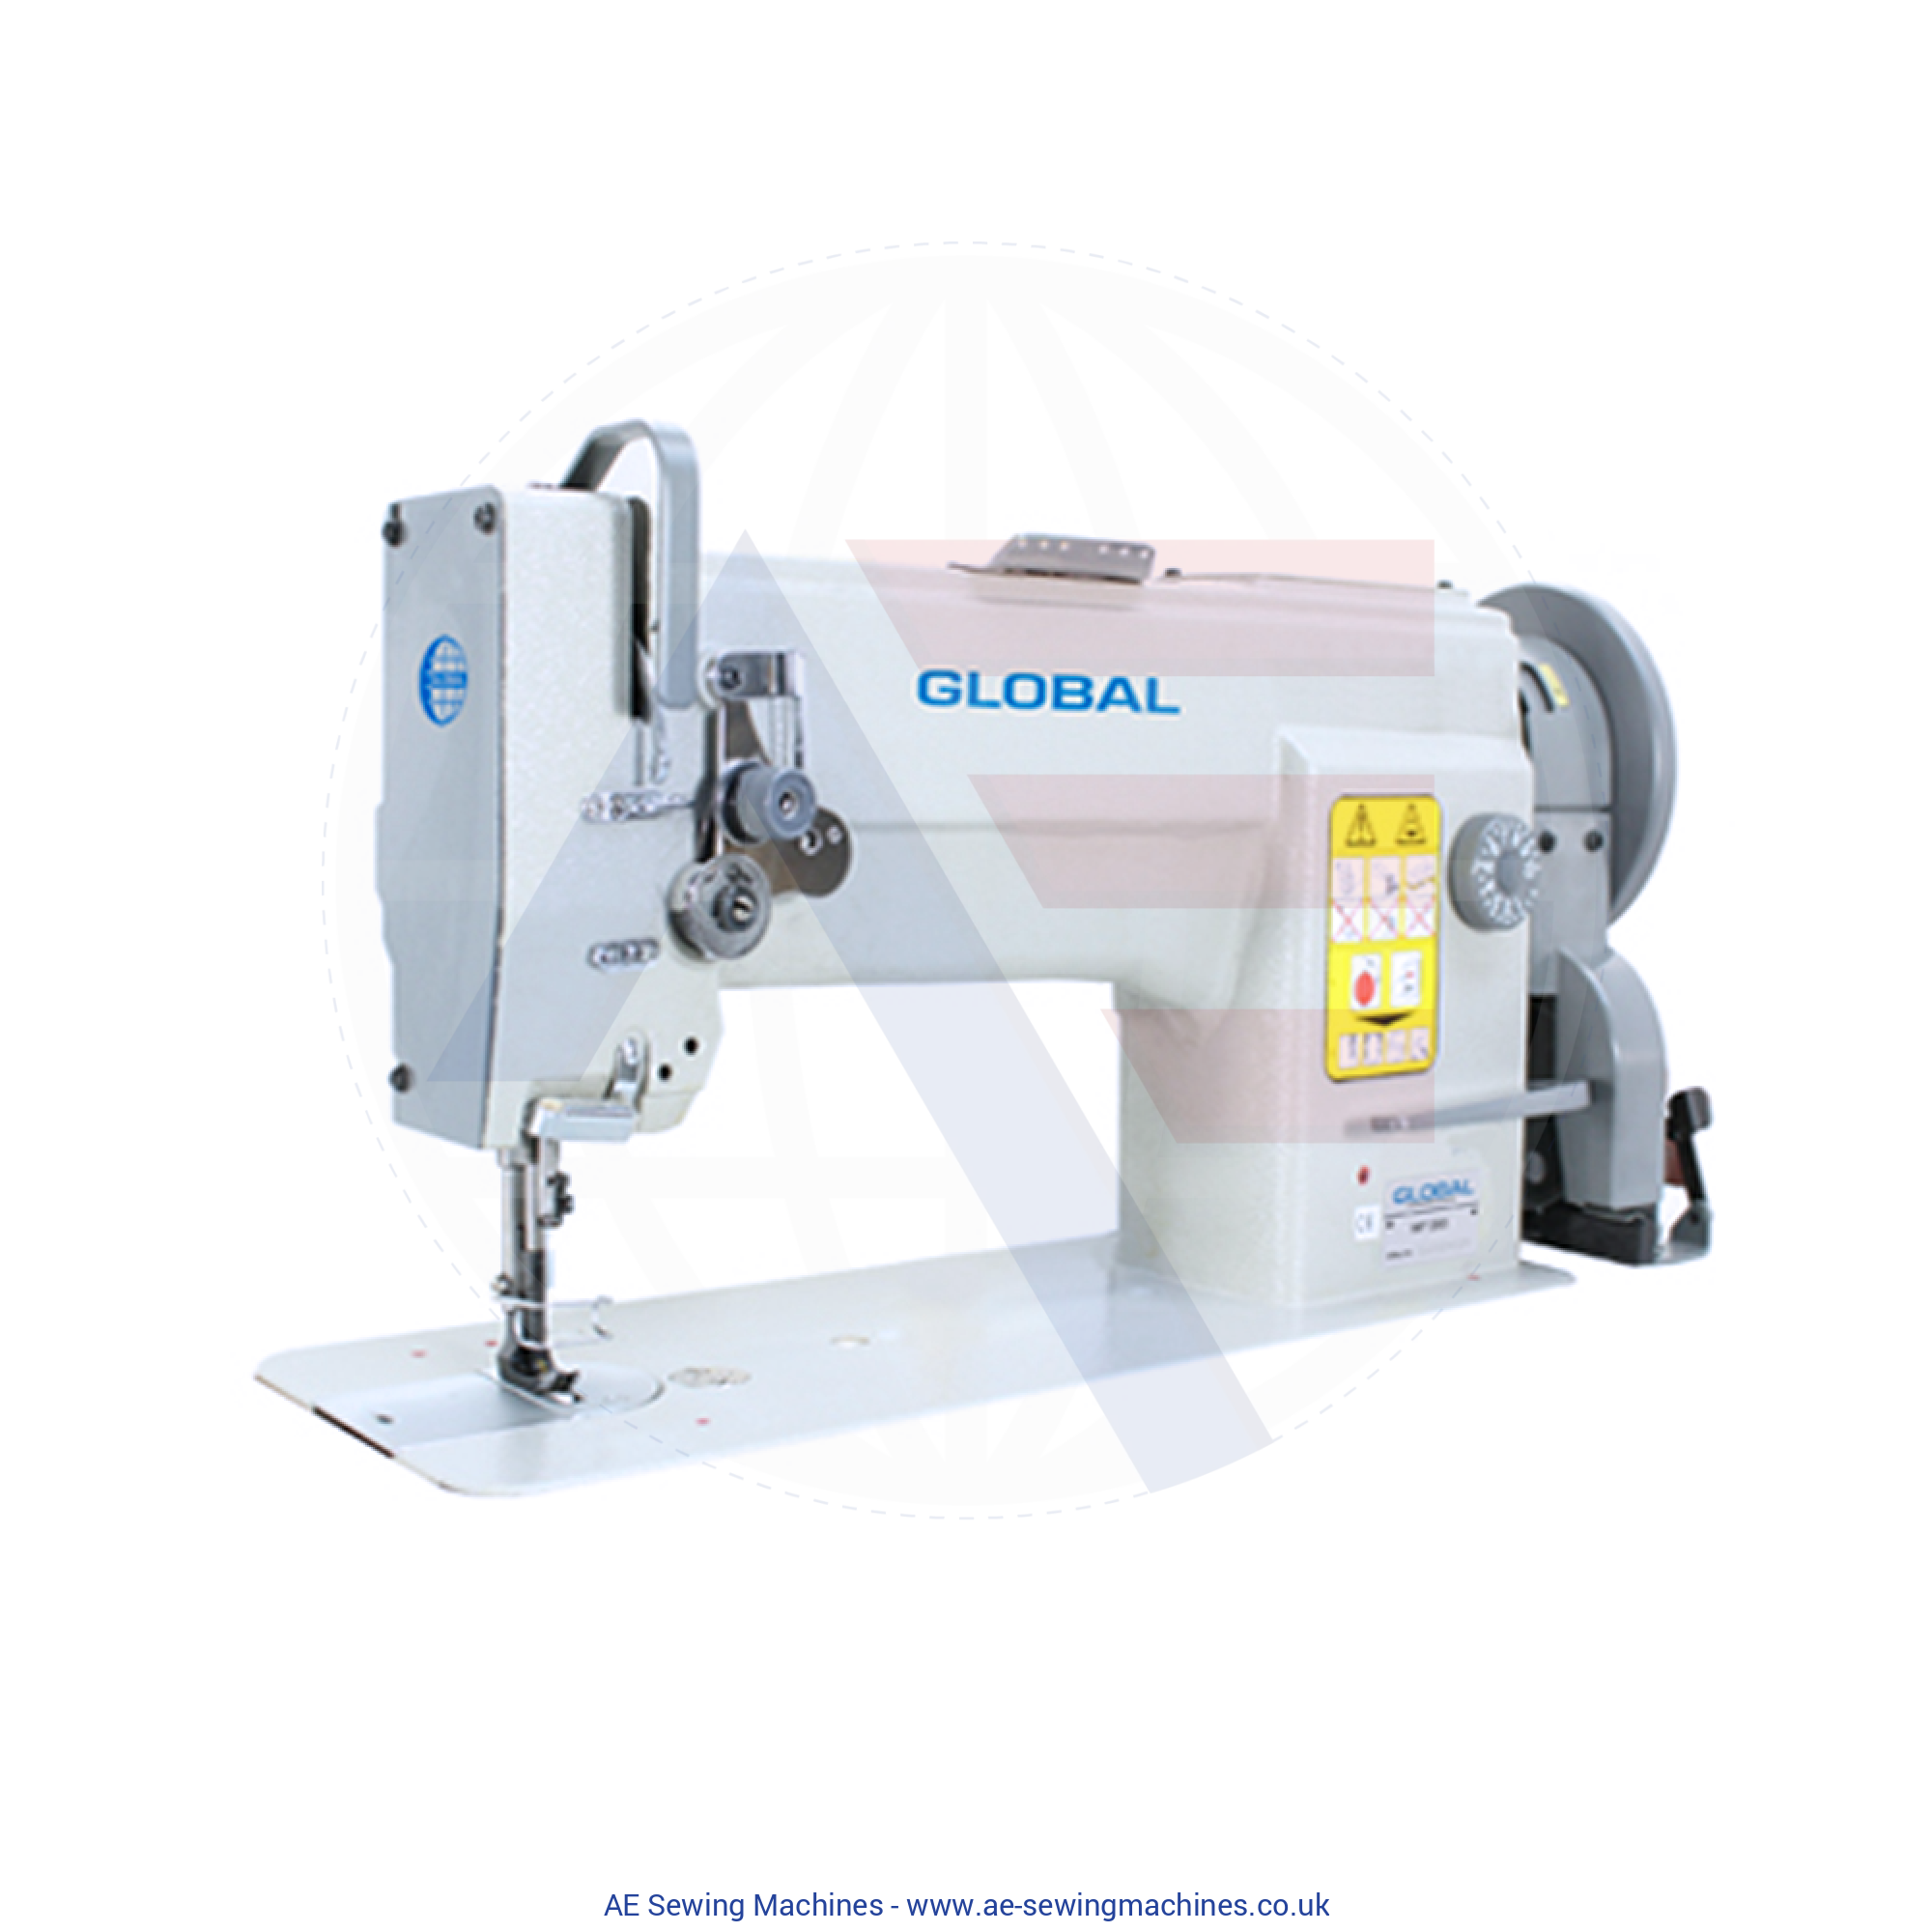 Global Wf 955 Series Flat-Bed Walking-Foot Machine Sewing Machines